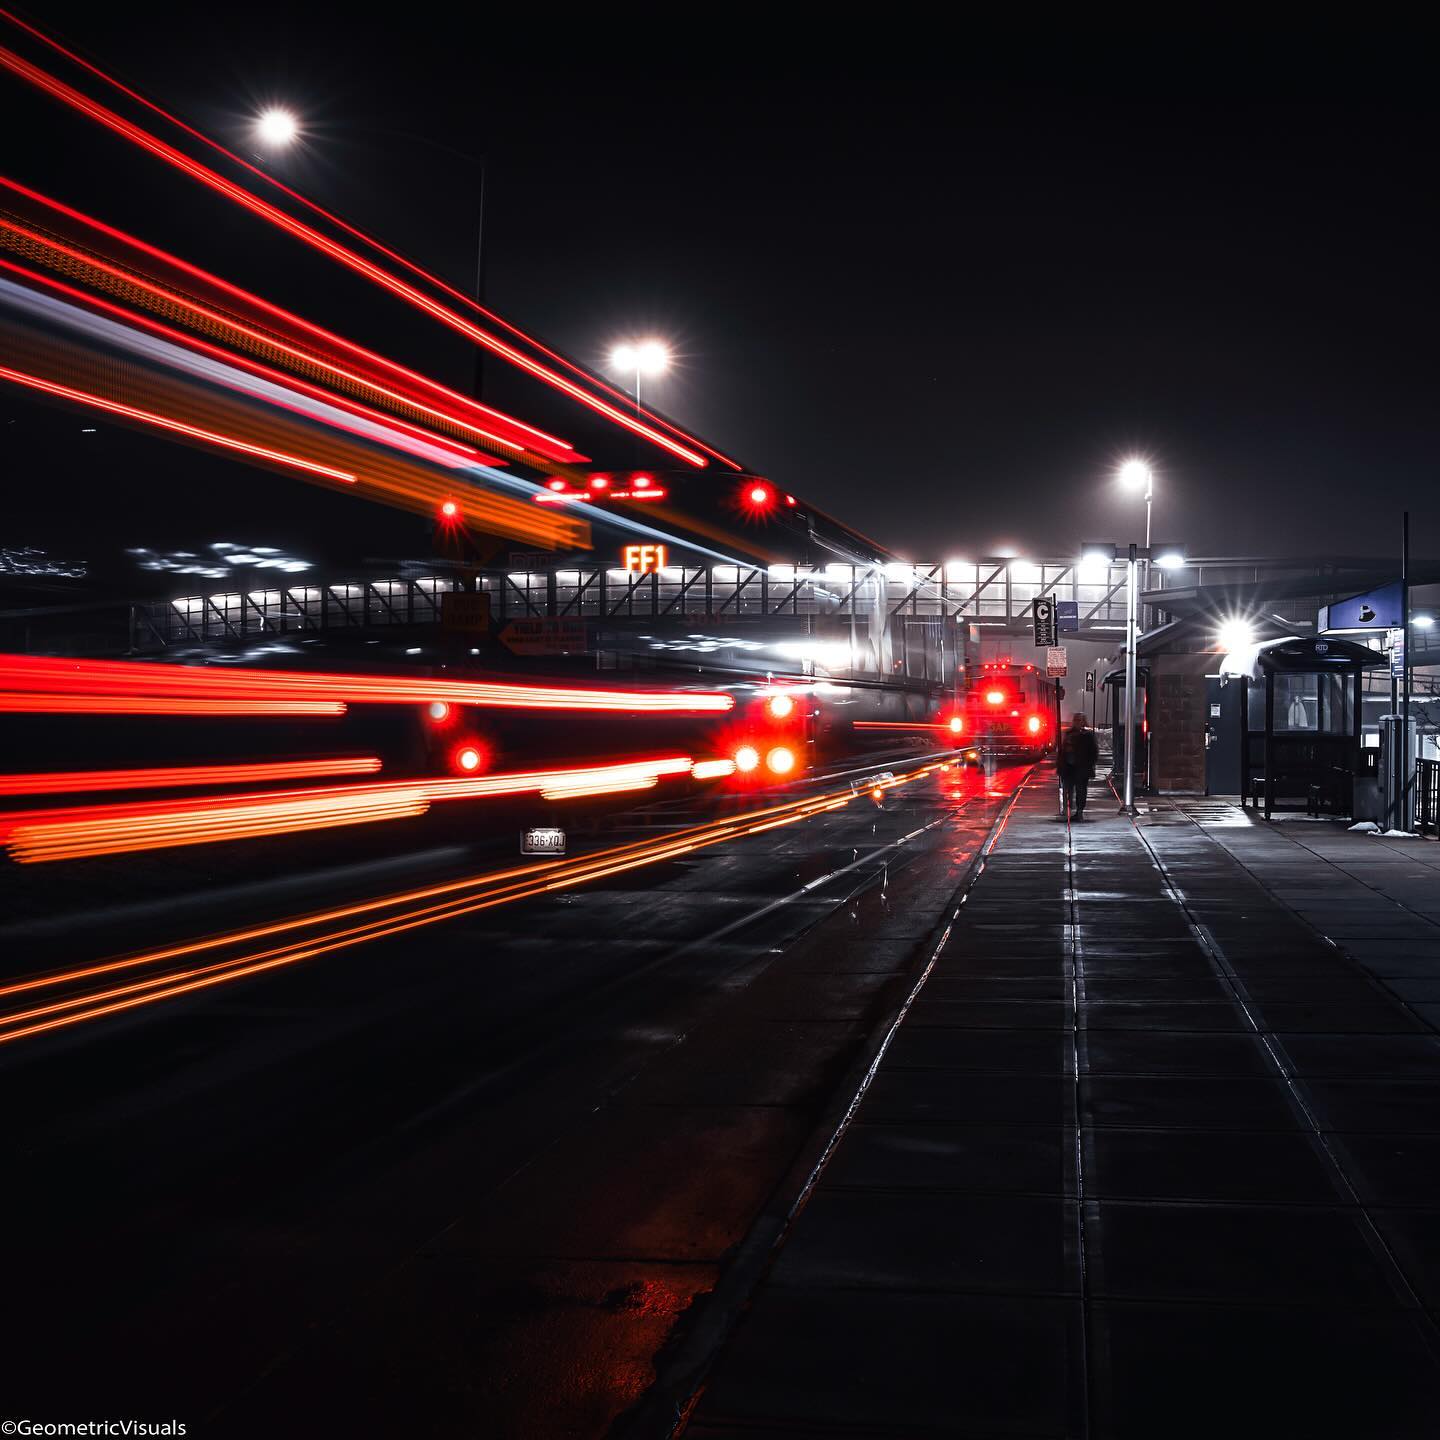 Forlorn . . .

The last passenger awaits departure as the fog rolls into a bus depot. 

ISO: 100 | F11 | 5”

•

#nightphotography #ig_nightphotography #rsa_streetview_ #creative_ace #nightshotz #lighttrail #thestreetpr0ject #urbanromantix_5000 #night_owlz #nightshooters #co10k #tones_addiction #raw_nightshots #denver_afterdark #depthobsessed #cinema_streets #toneception #streetphotography #moody_shotz_ #lighttrailsphotography #dof_addicts #dof_brilliance #bokeh_addicts #bokehcity #streetsfired #streetfocus #streetgrammer